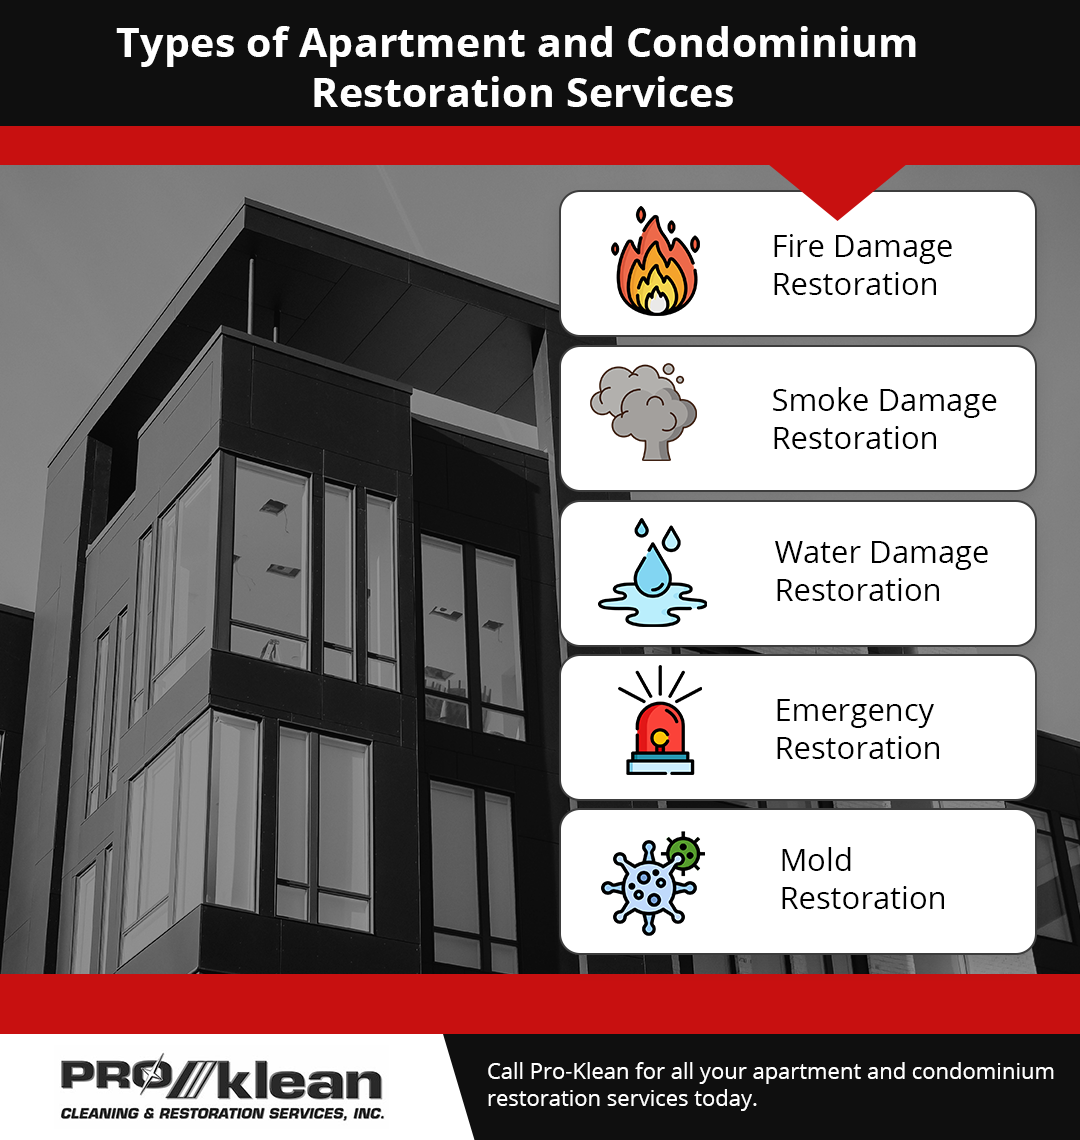 Types of Apartment and Condominium Restoration Services.png